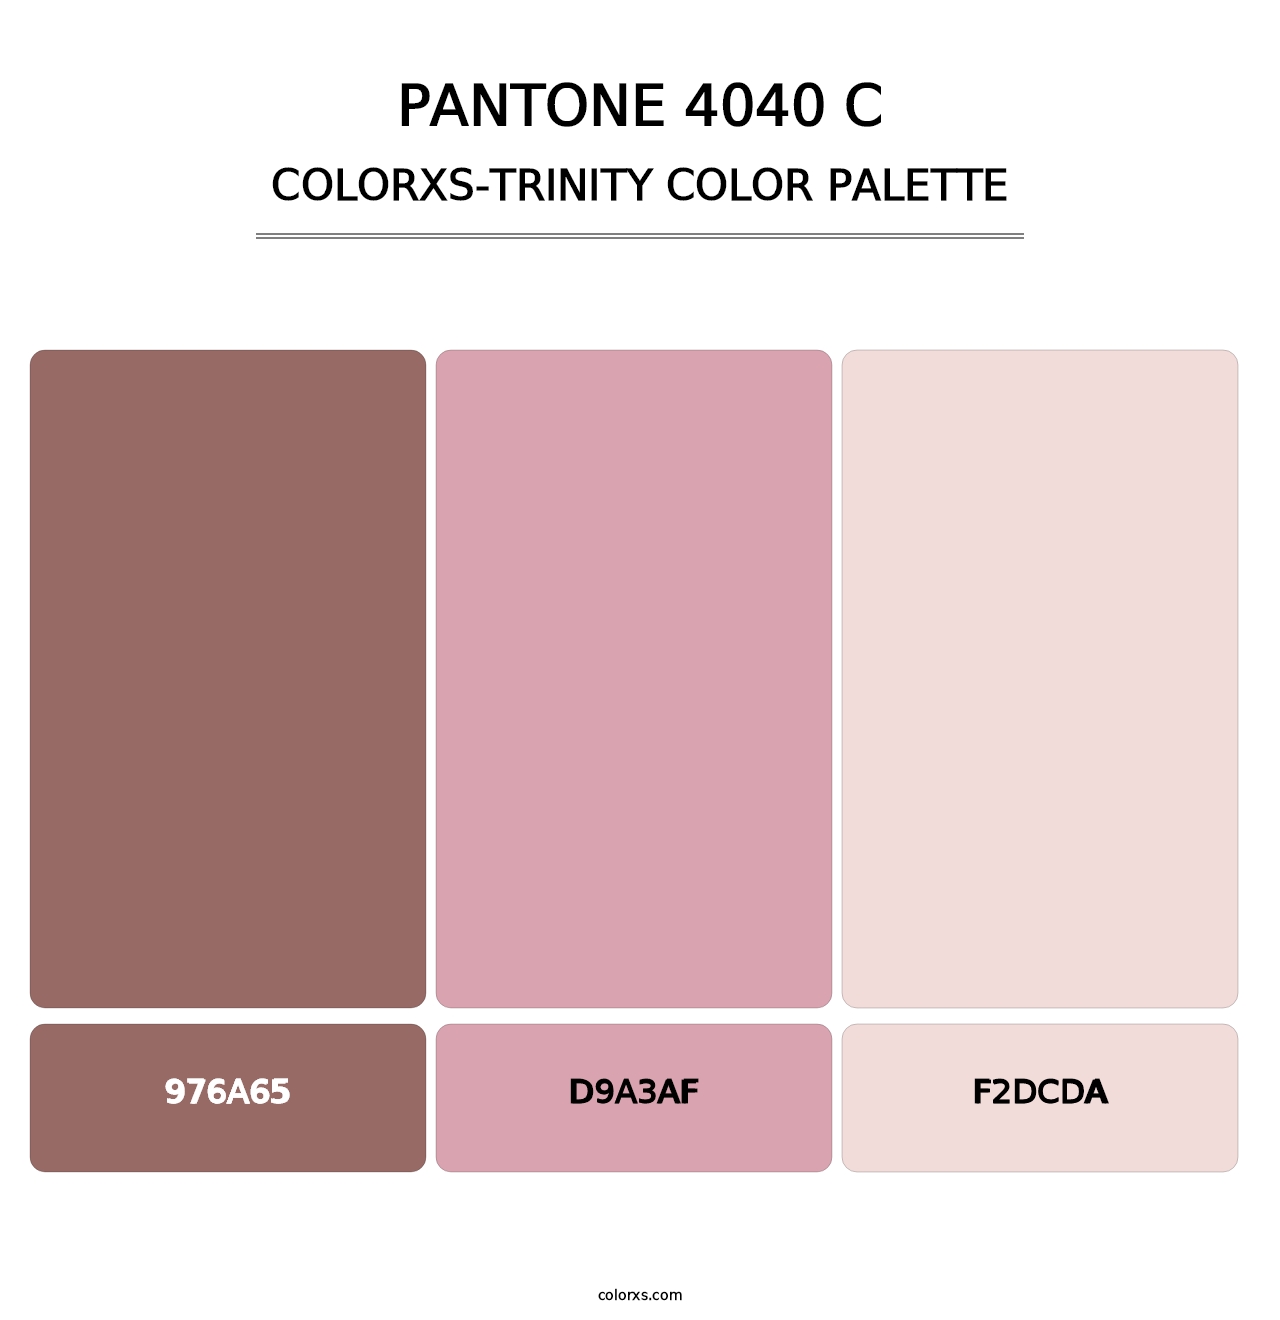 PANTONE 4040 C - Colorxs Trinity Palette